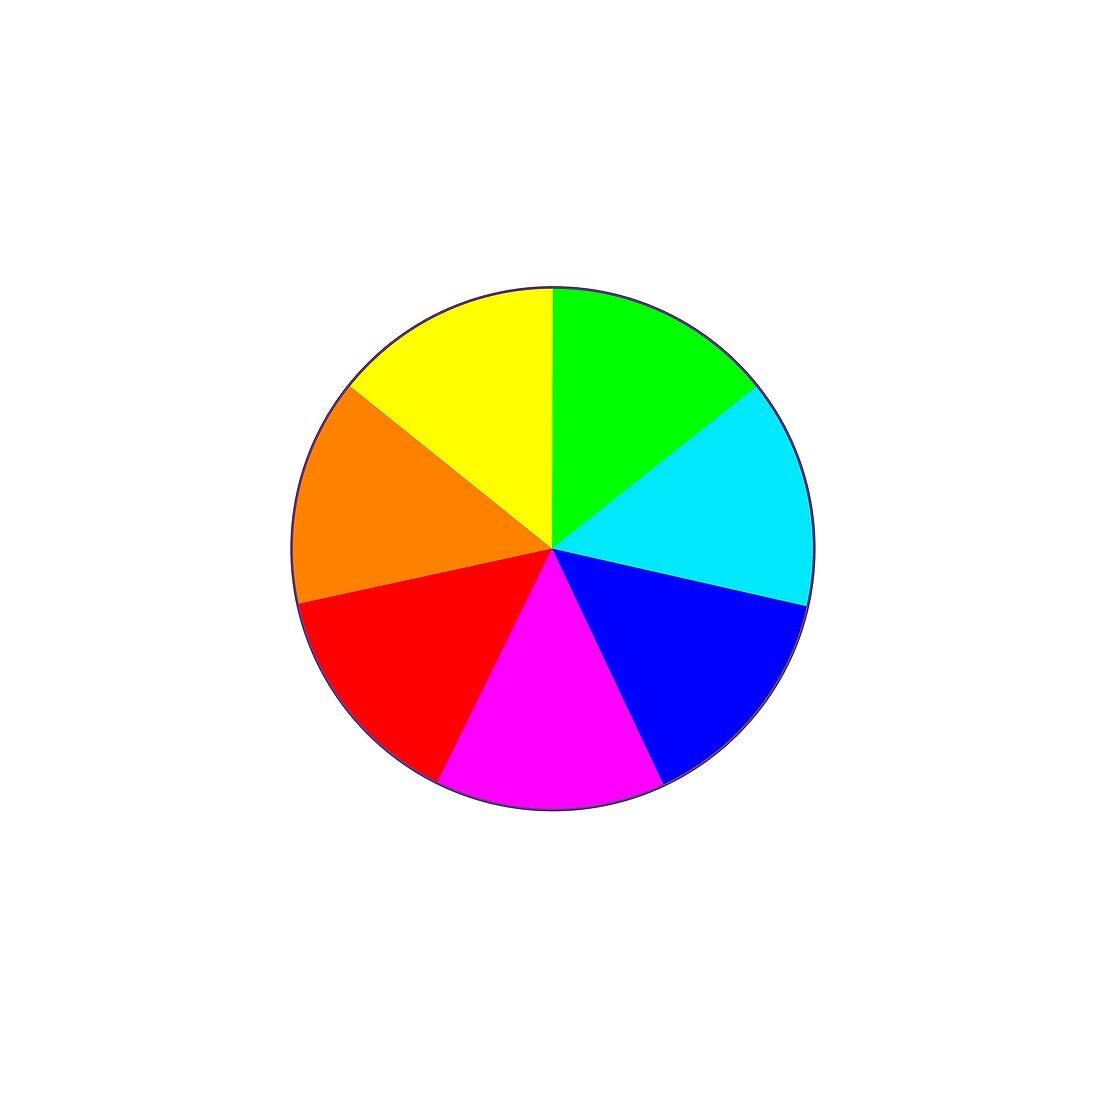 Colour wheel, illustration